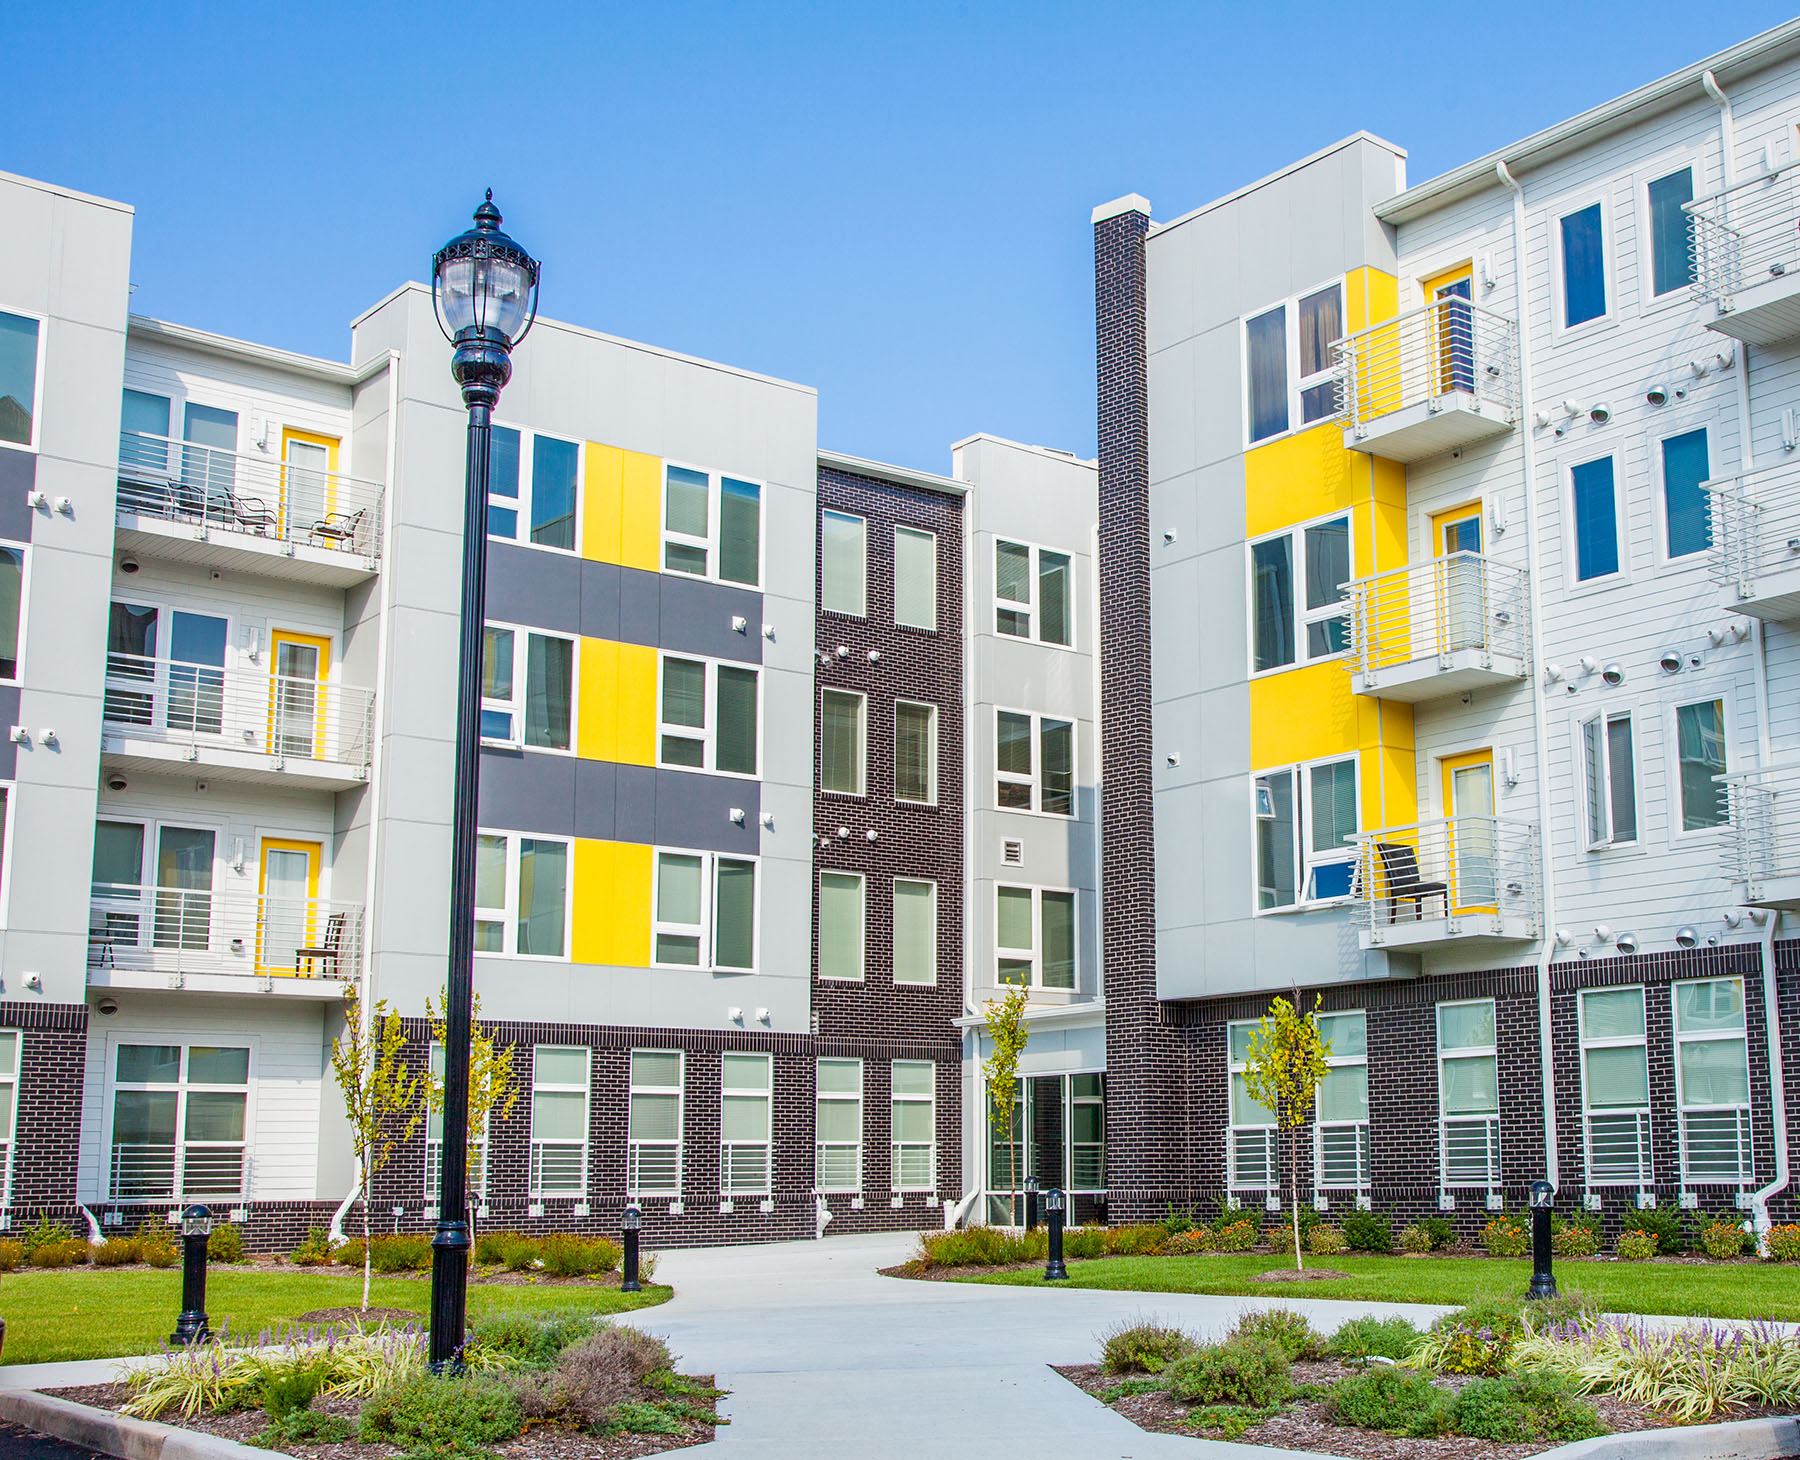 2 Bedroom Apartments for Rent in New Jersey: 1,104 Rentals – RENTCafé